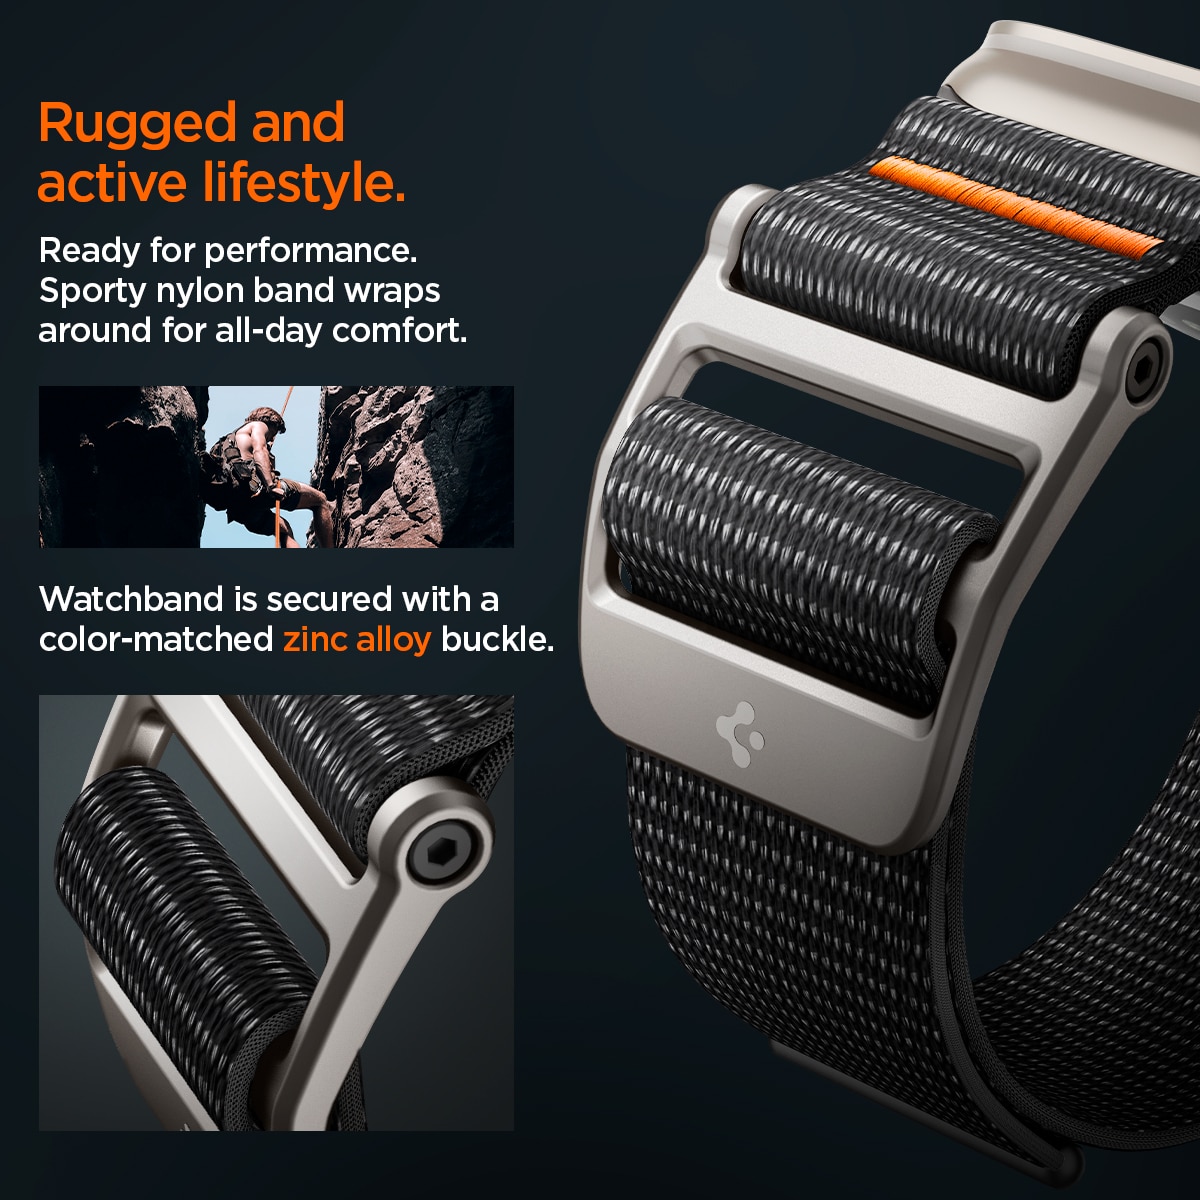 DuraPro Flex Ultra Apple Watch SE 44mm Black